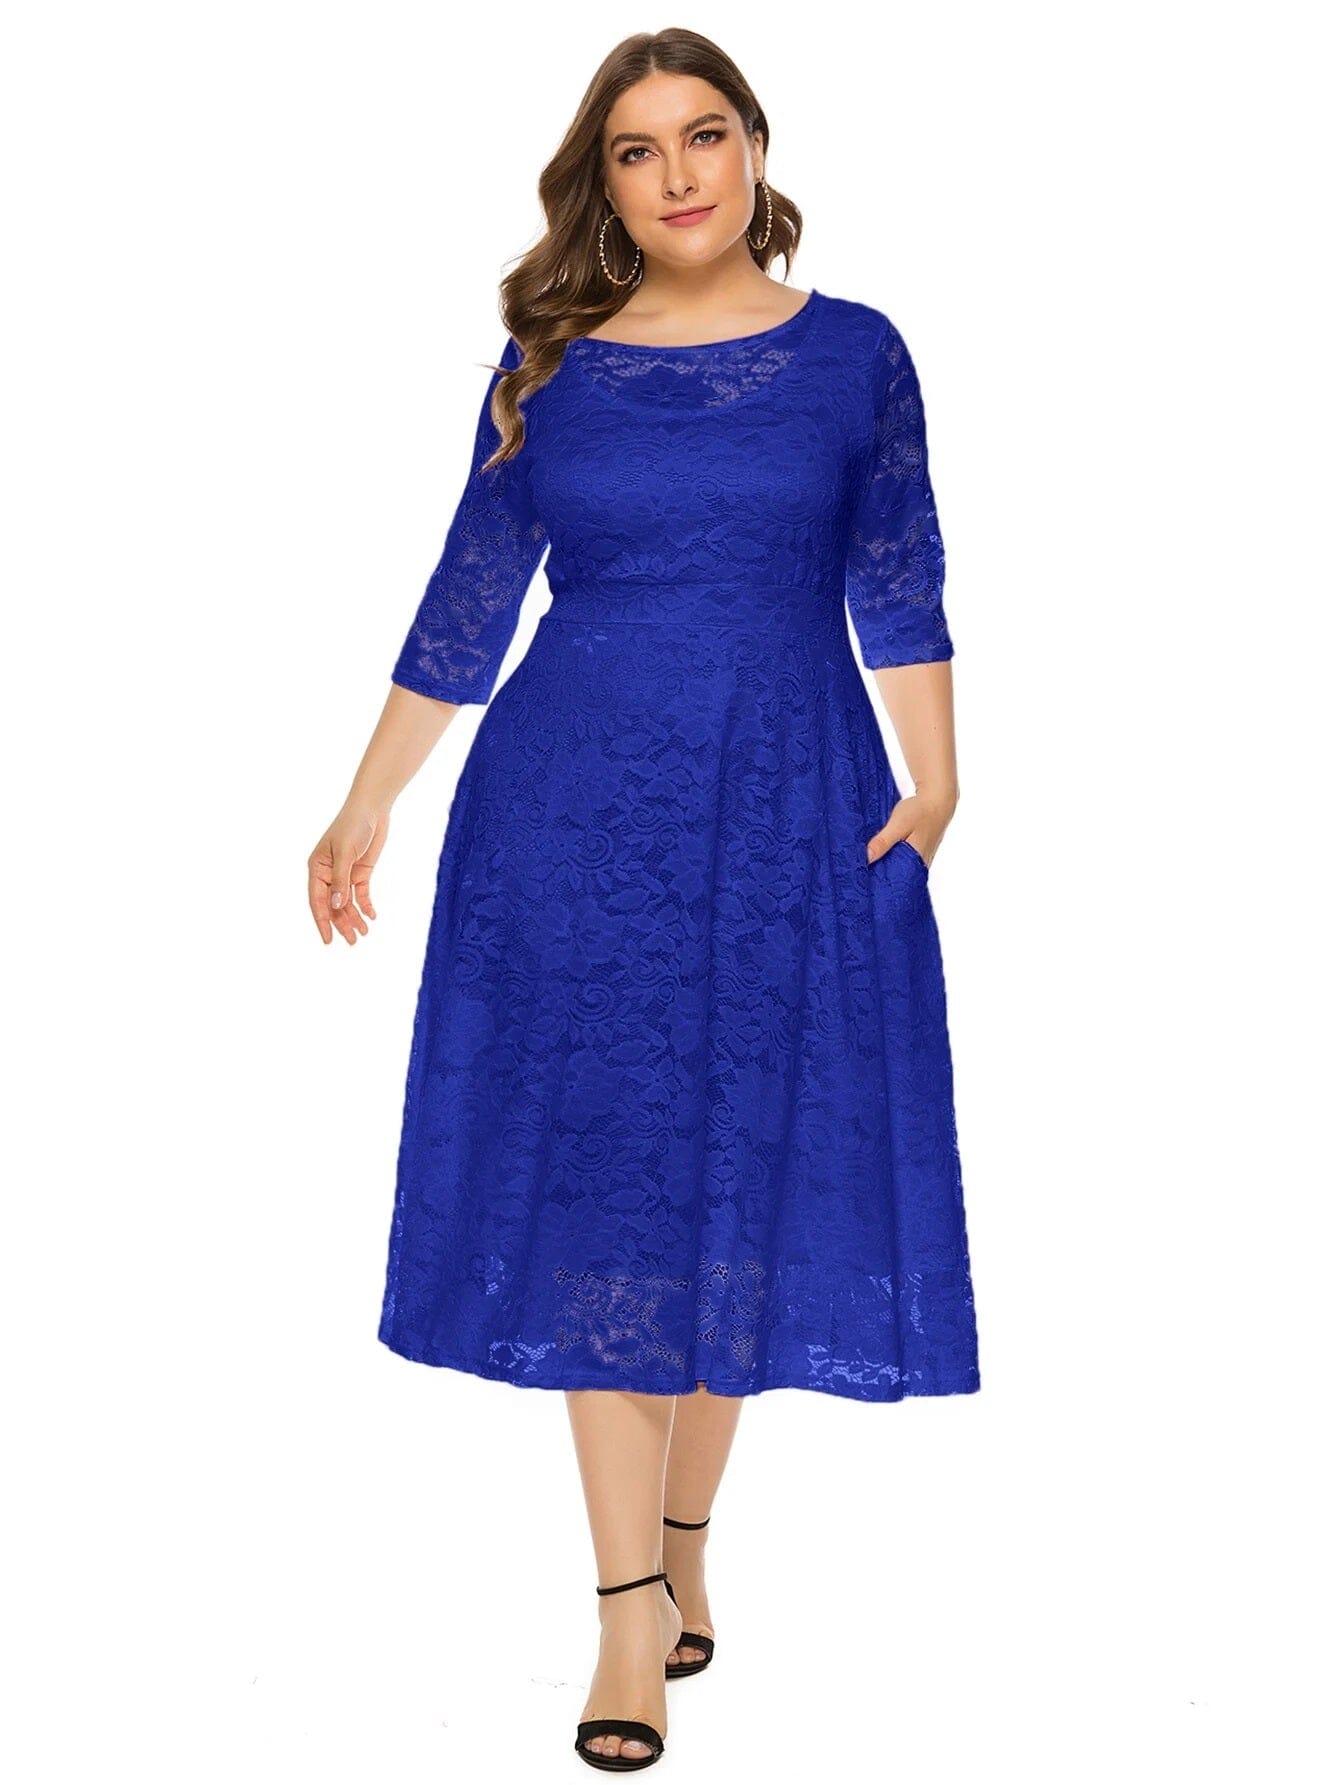 Women Plus Size Vintage Lace Swing Party Cocktail Wedding Midi Dress with pocket Dresses jehouze Royal Blue XL 